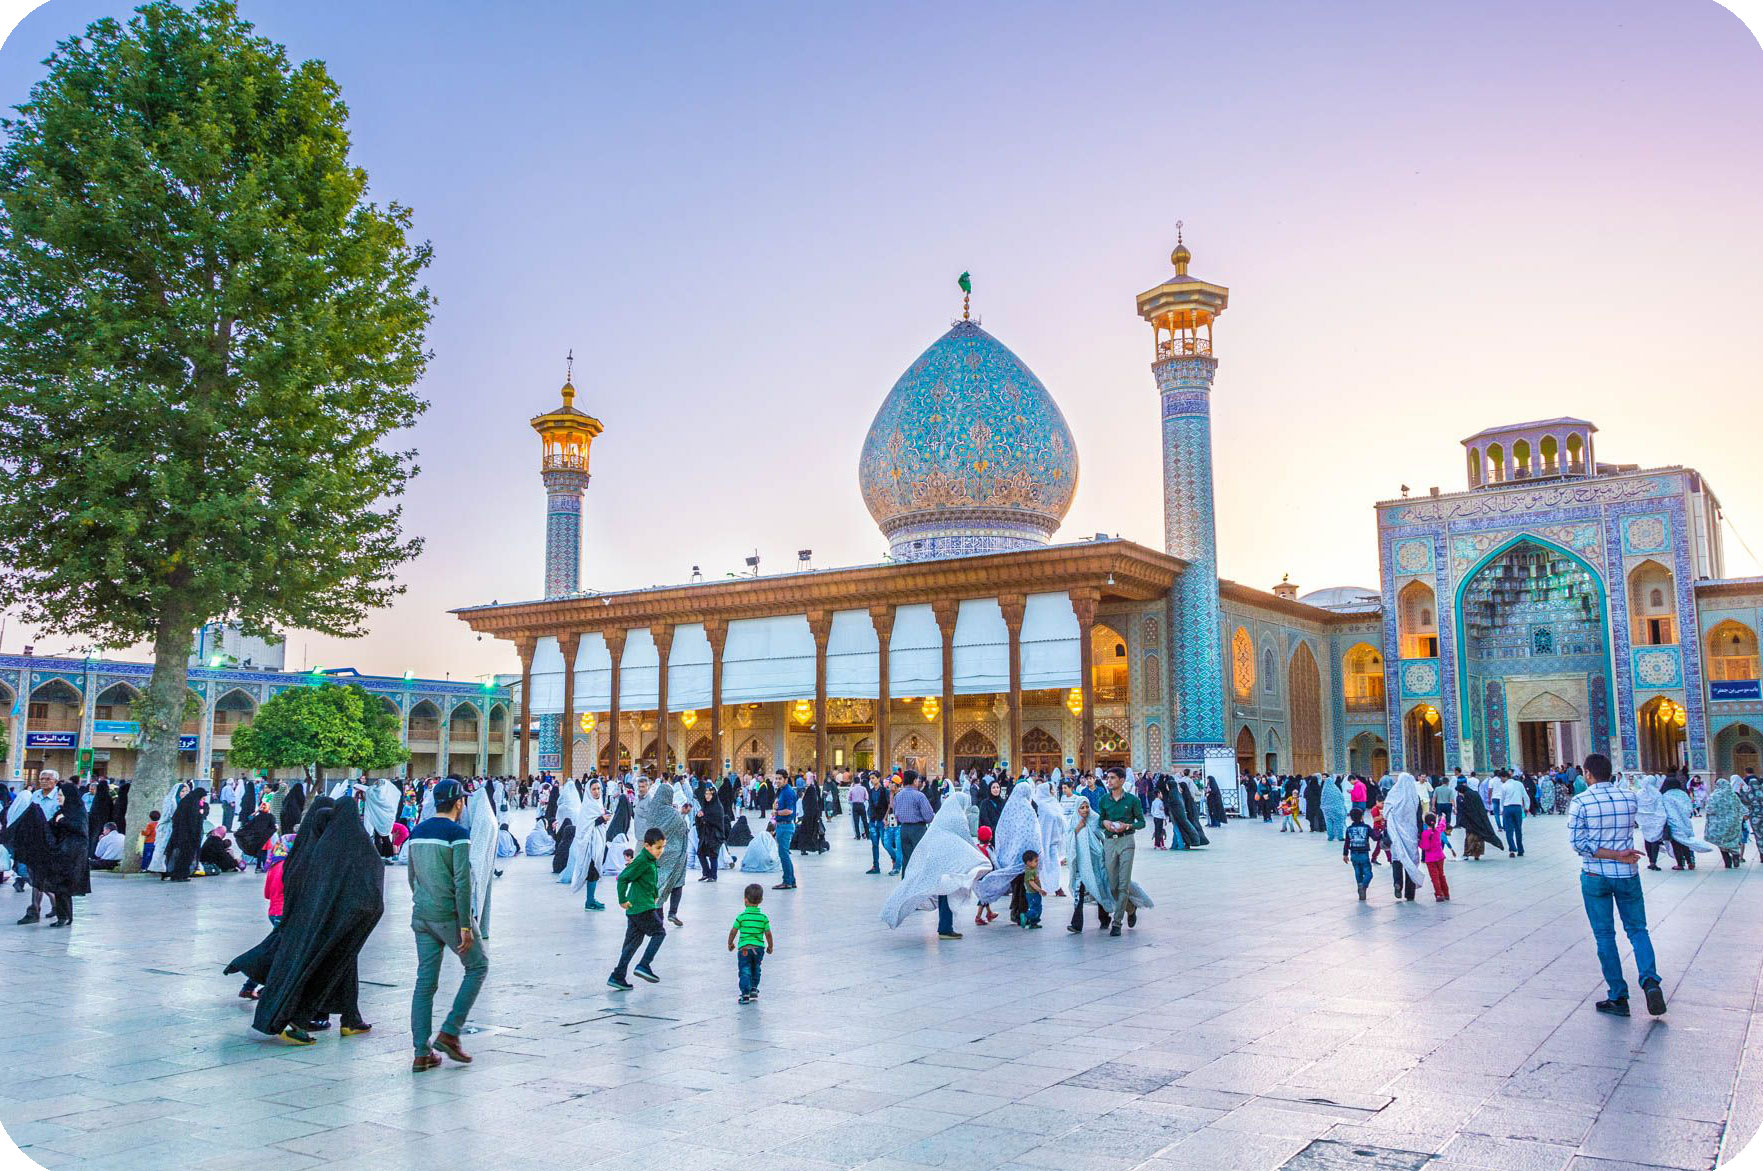 https://media.vand.ru/upload/BLOG/Иран-Шираз-зеркальная-мечеть.jpg